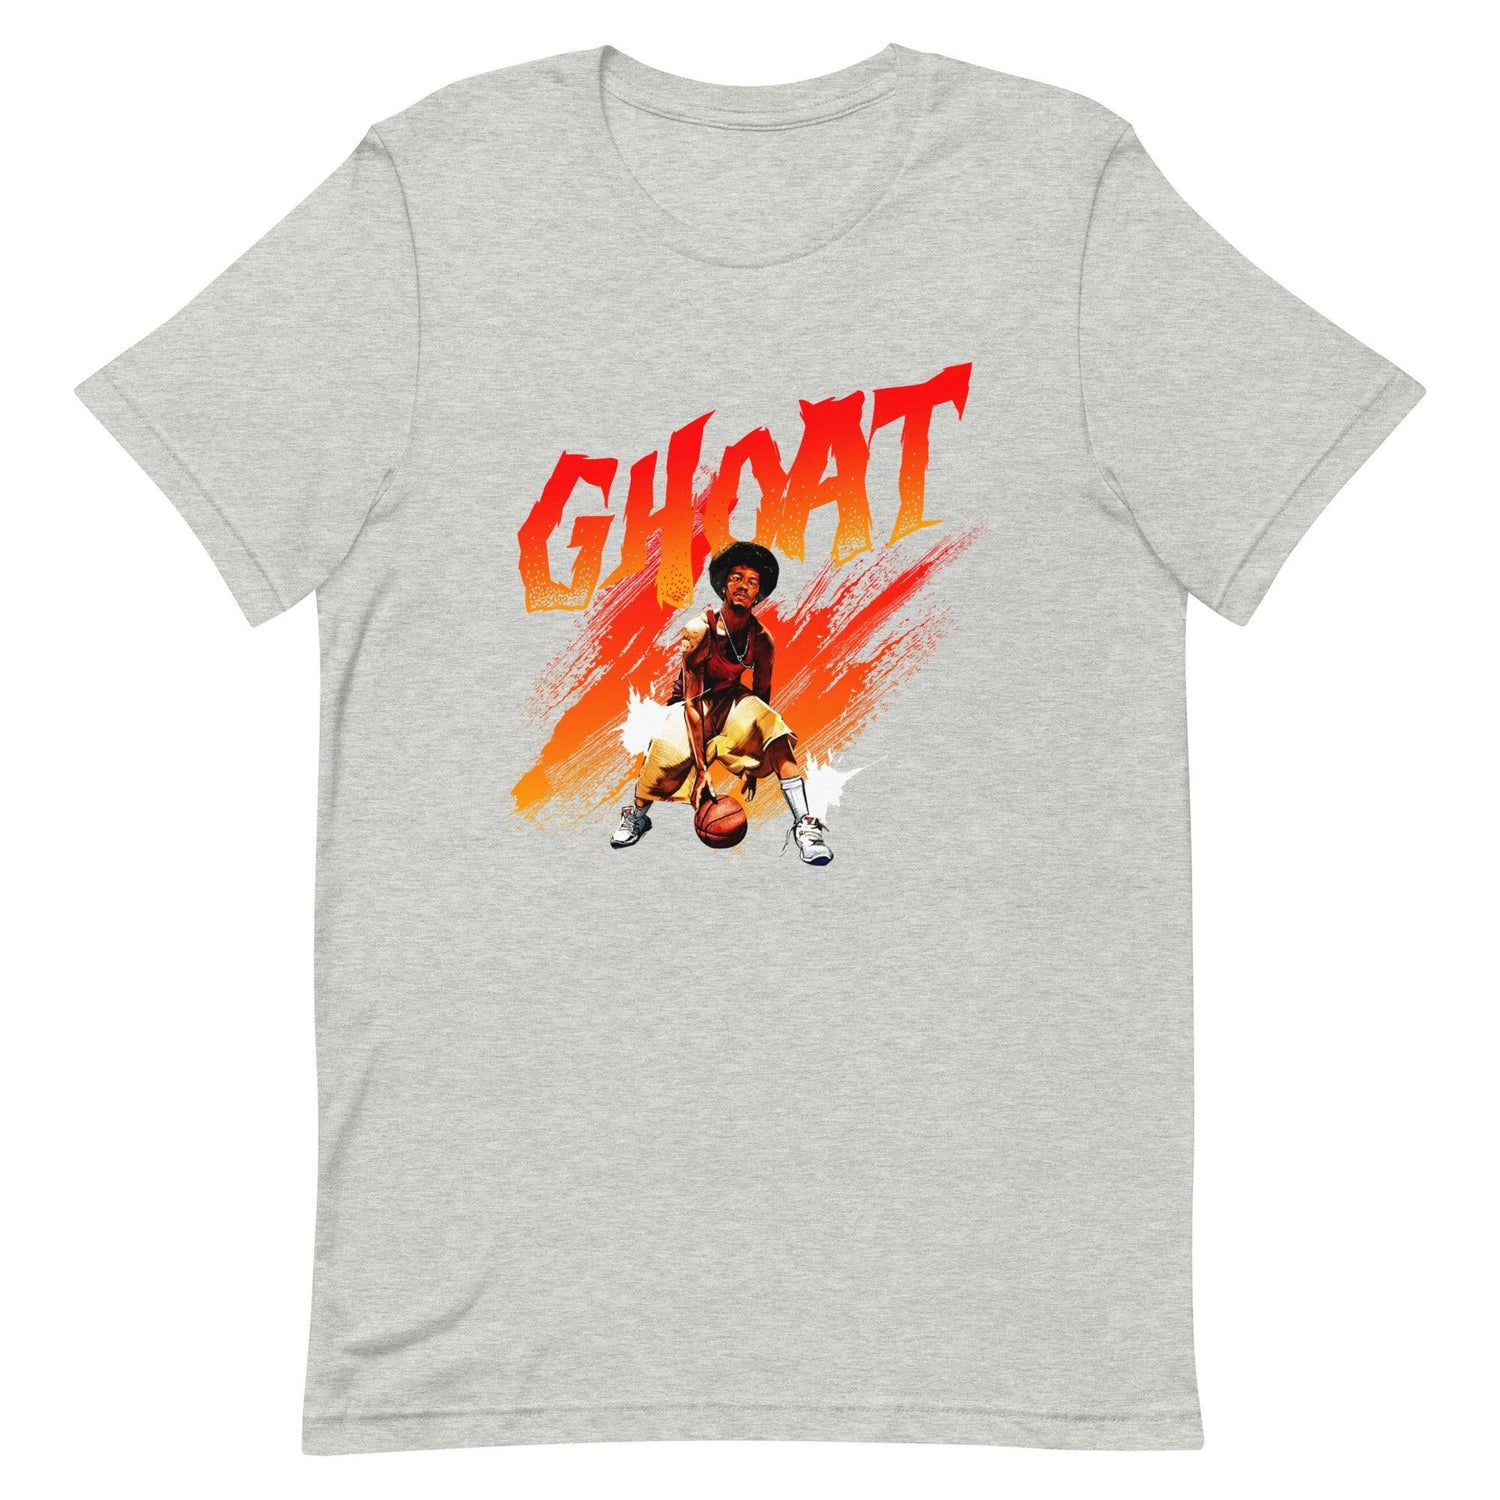 Hot Sauce "Ghoat" t-shirt - Fan Arch